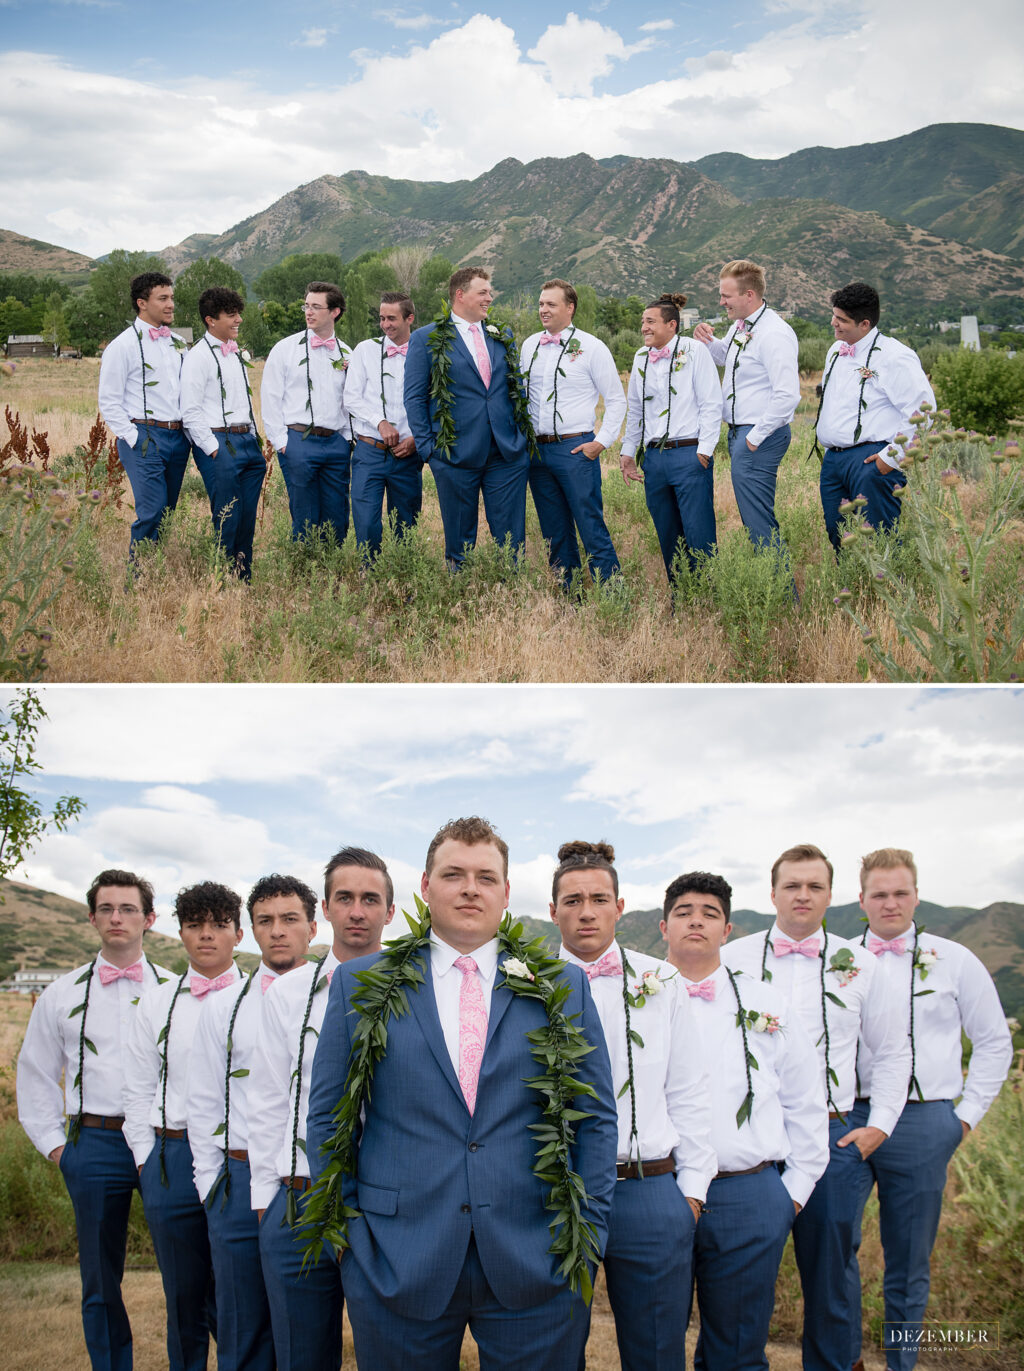 The groomsmen stand behind the groom